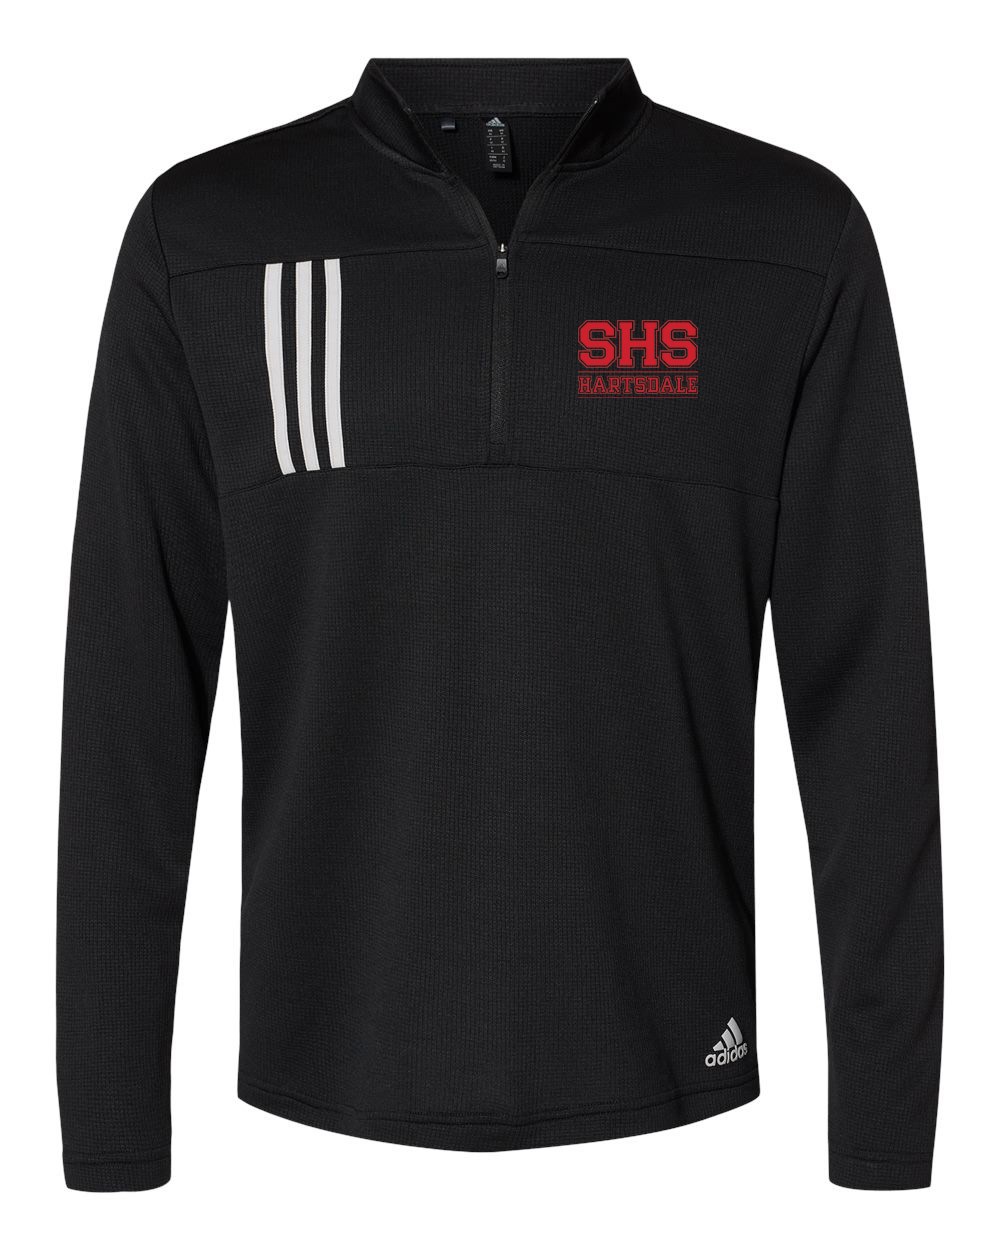 SHS Staff Adidas 3 Stripe Men's Quarter Zip w/ SHS Logo - Please Allow 2-3 Weeks for Delivery